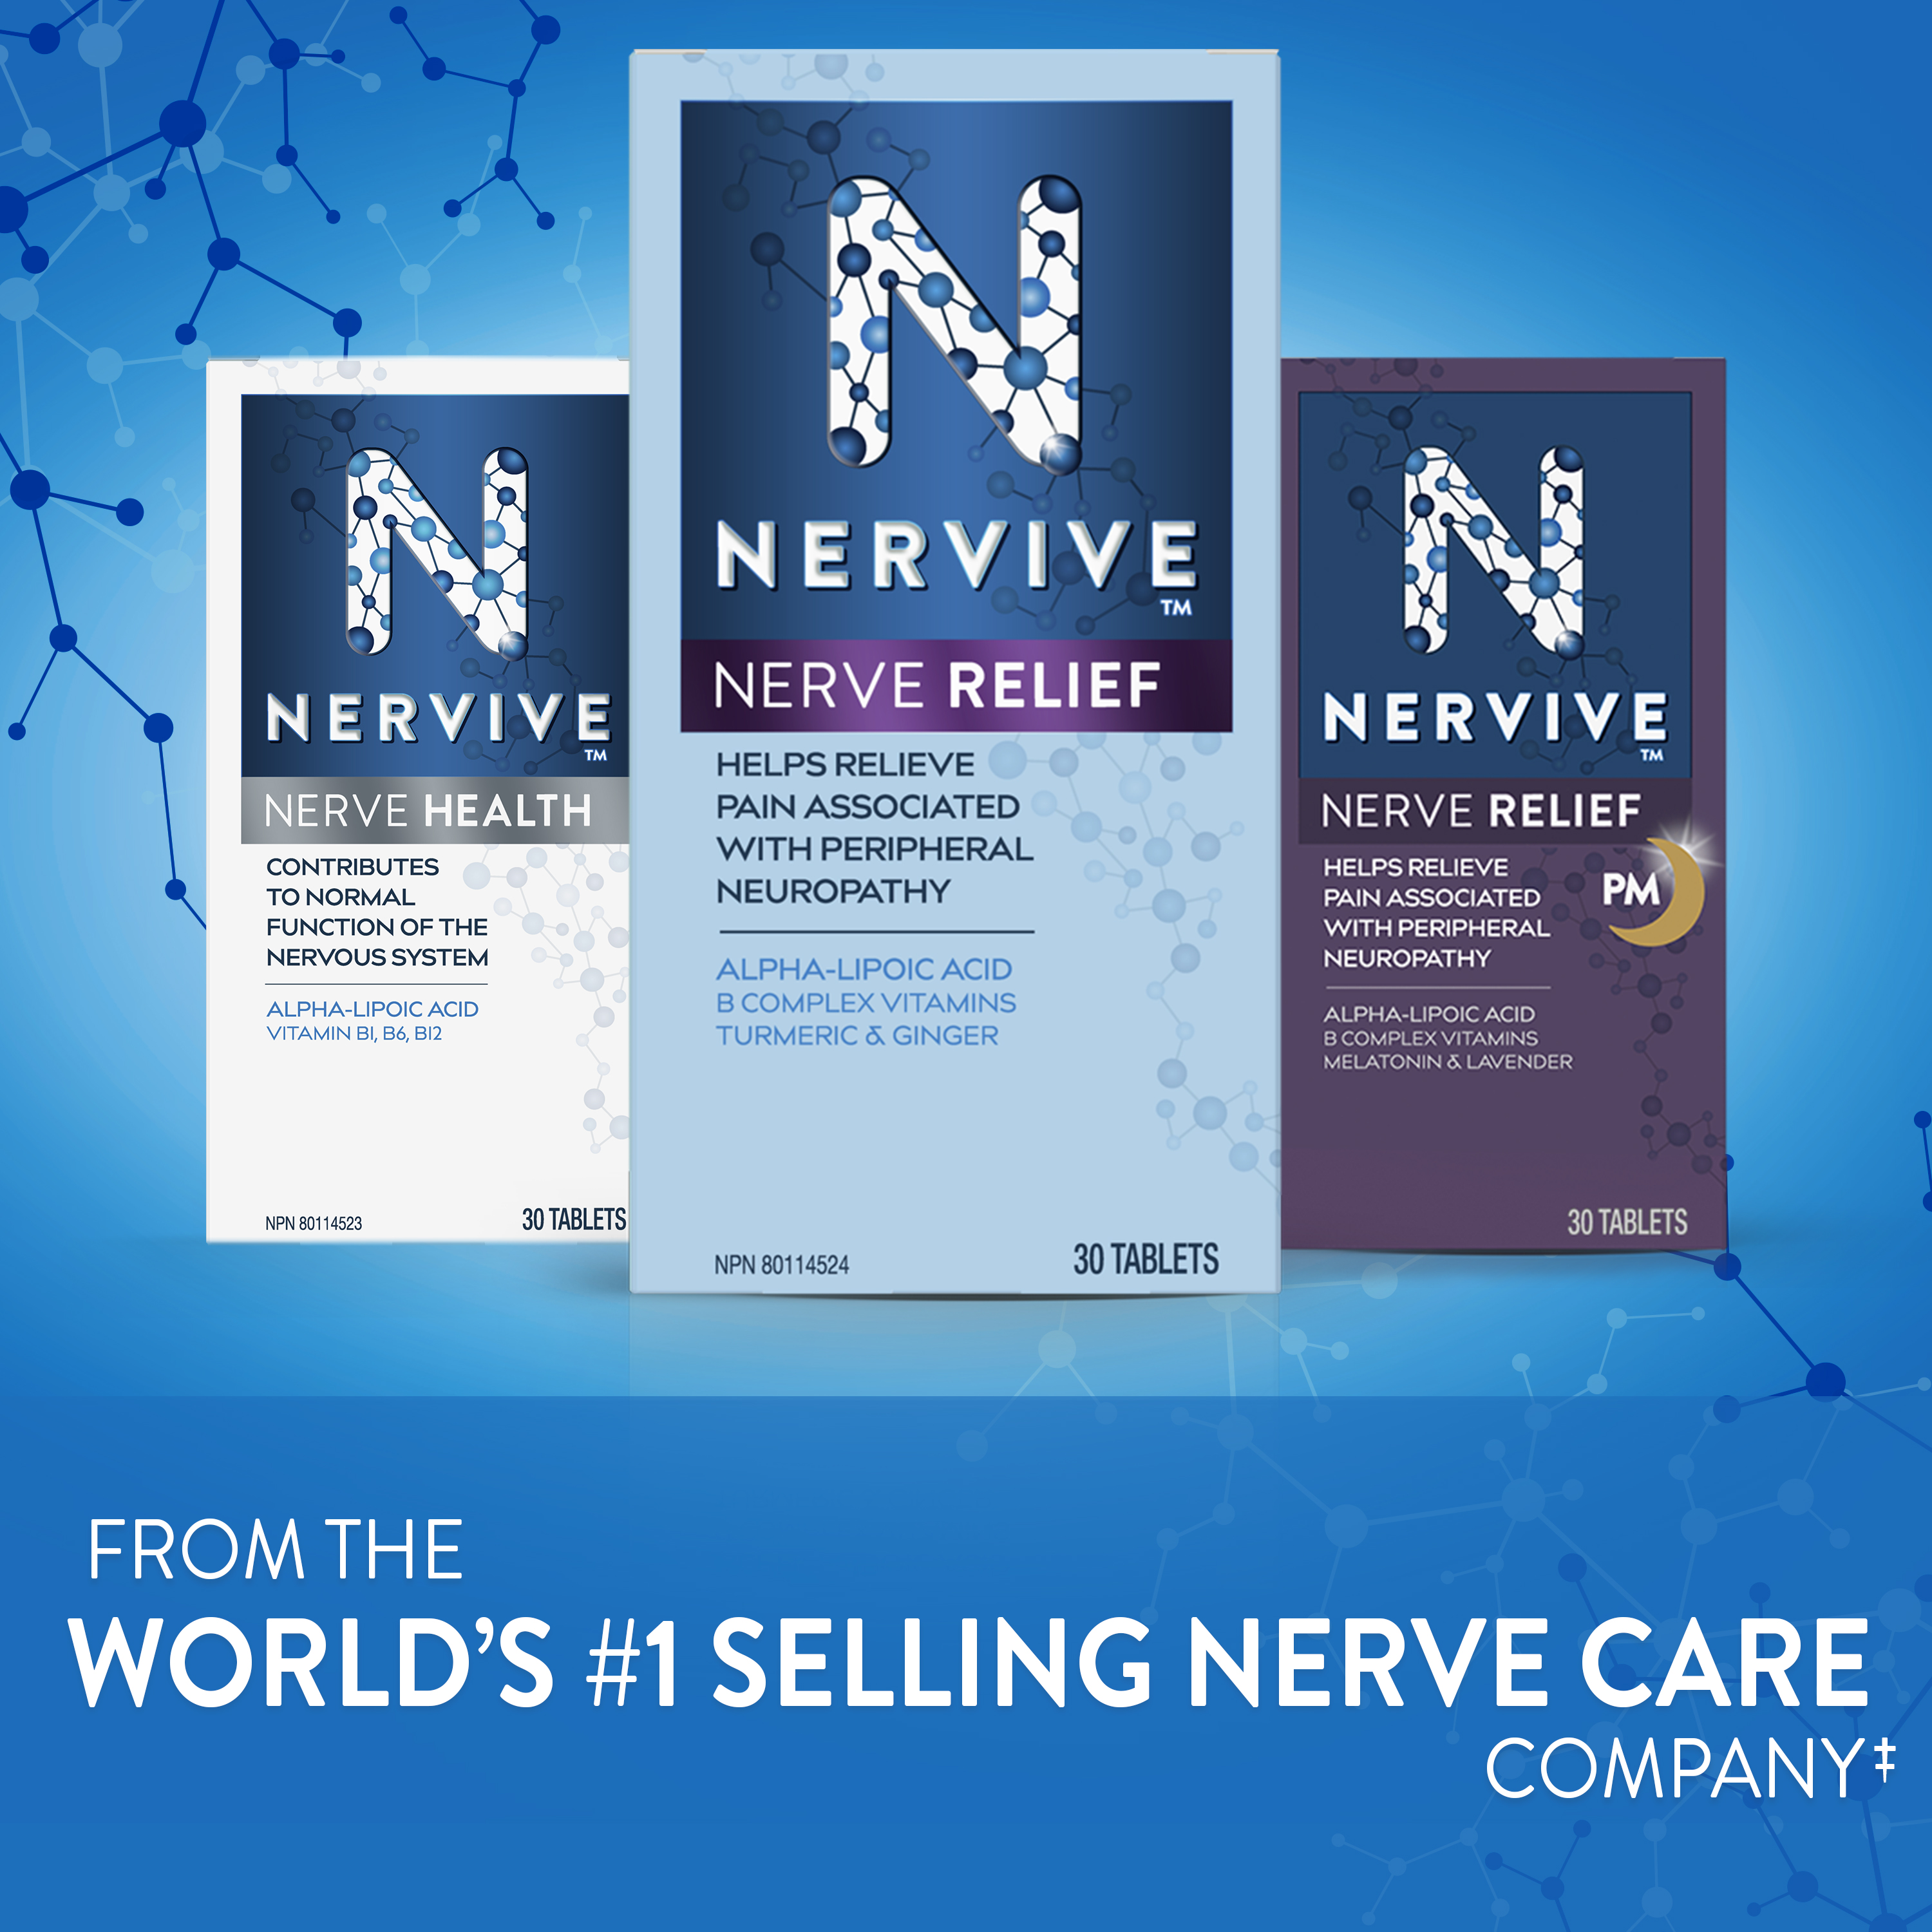 Nerve Relief side image 10